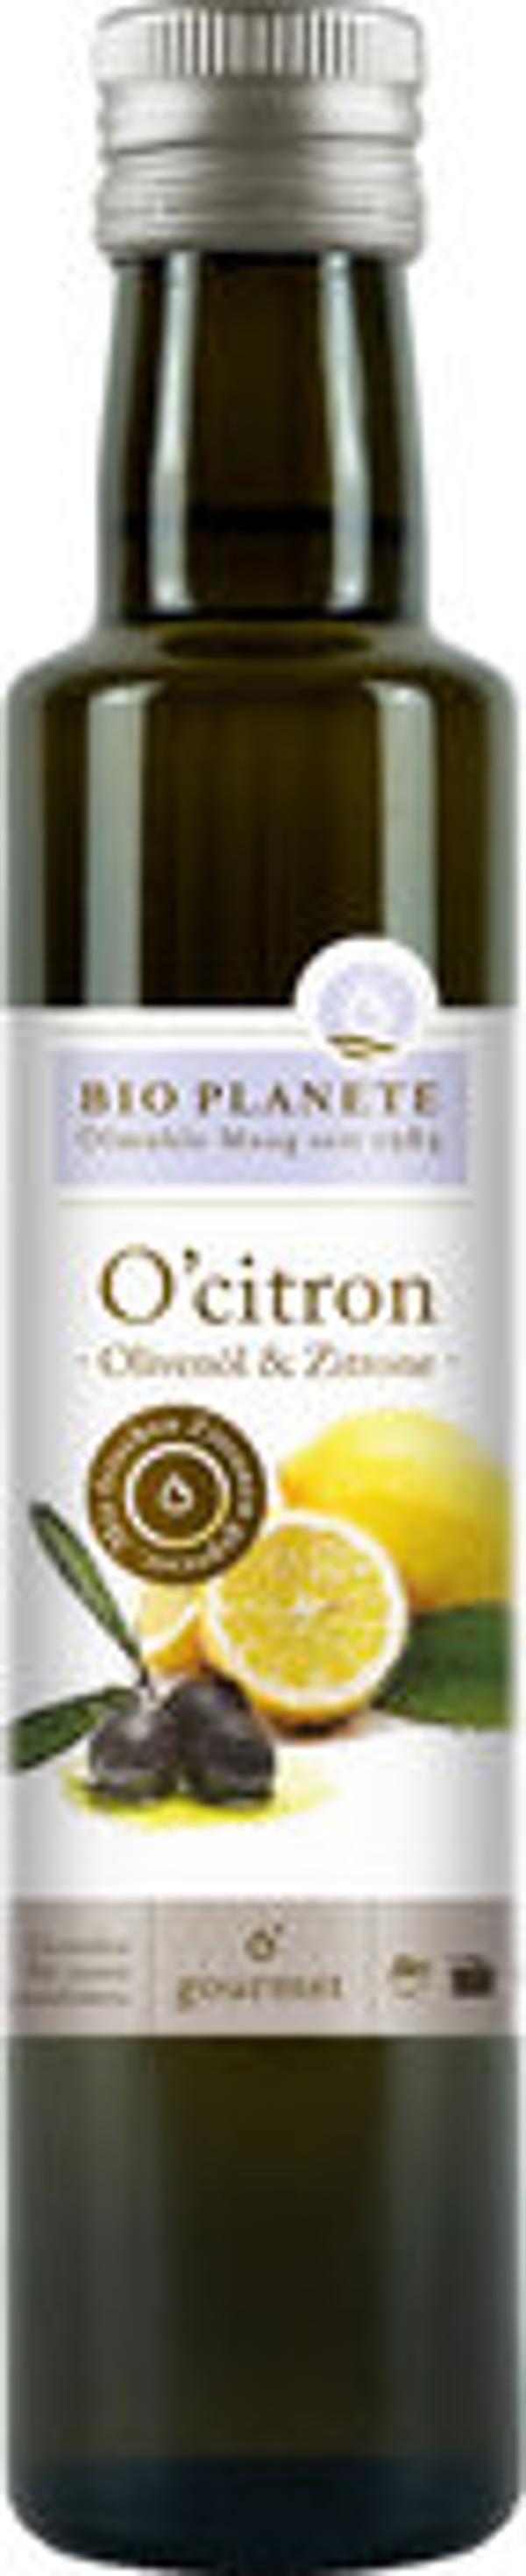 Produktfoto zu Olivenöl O'citron